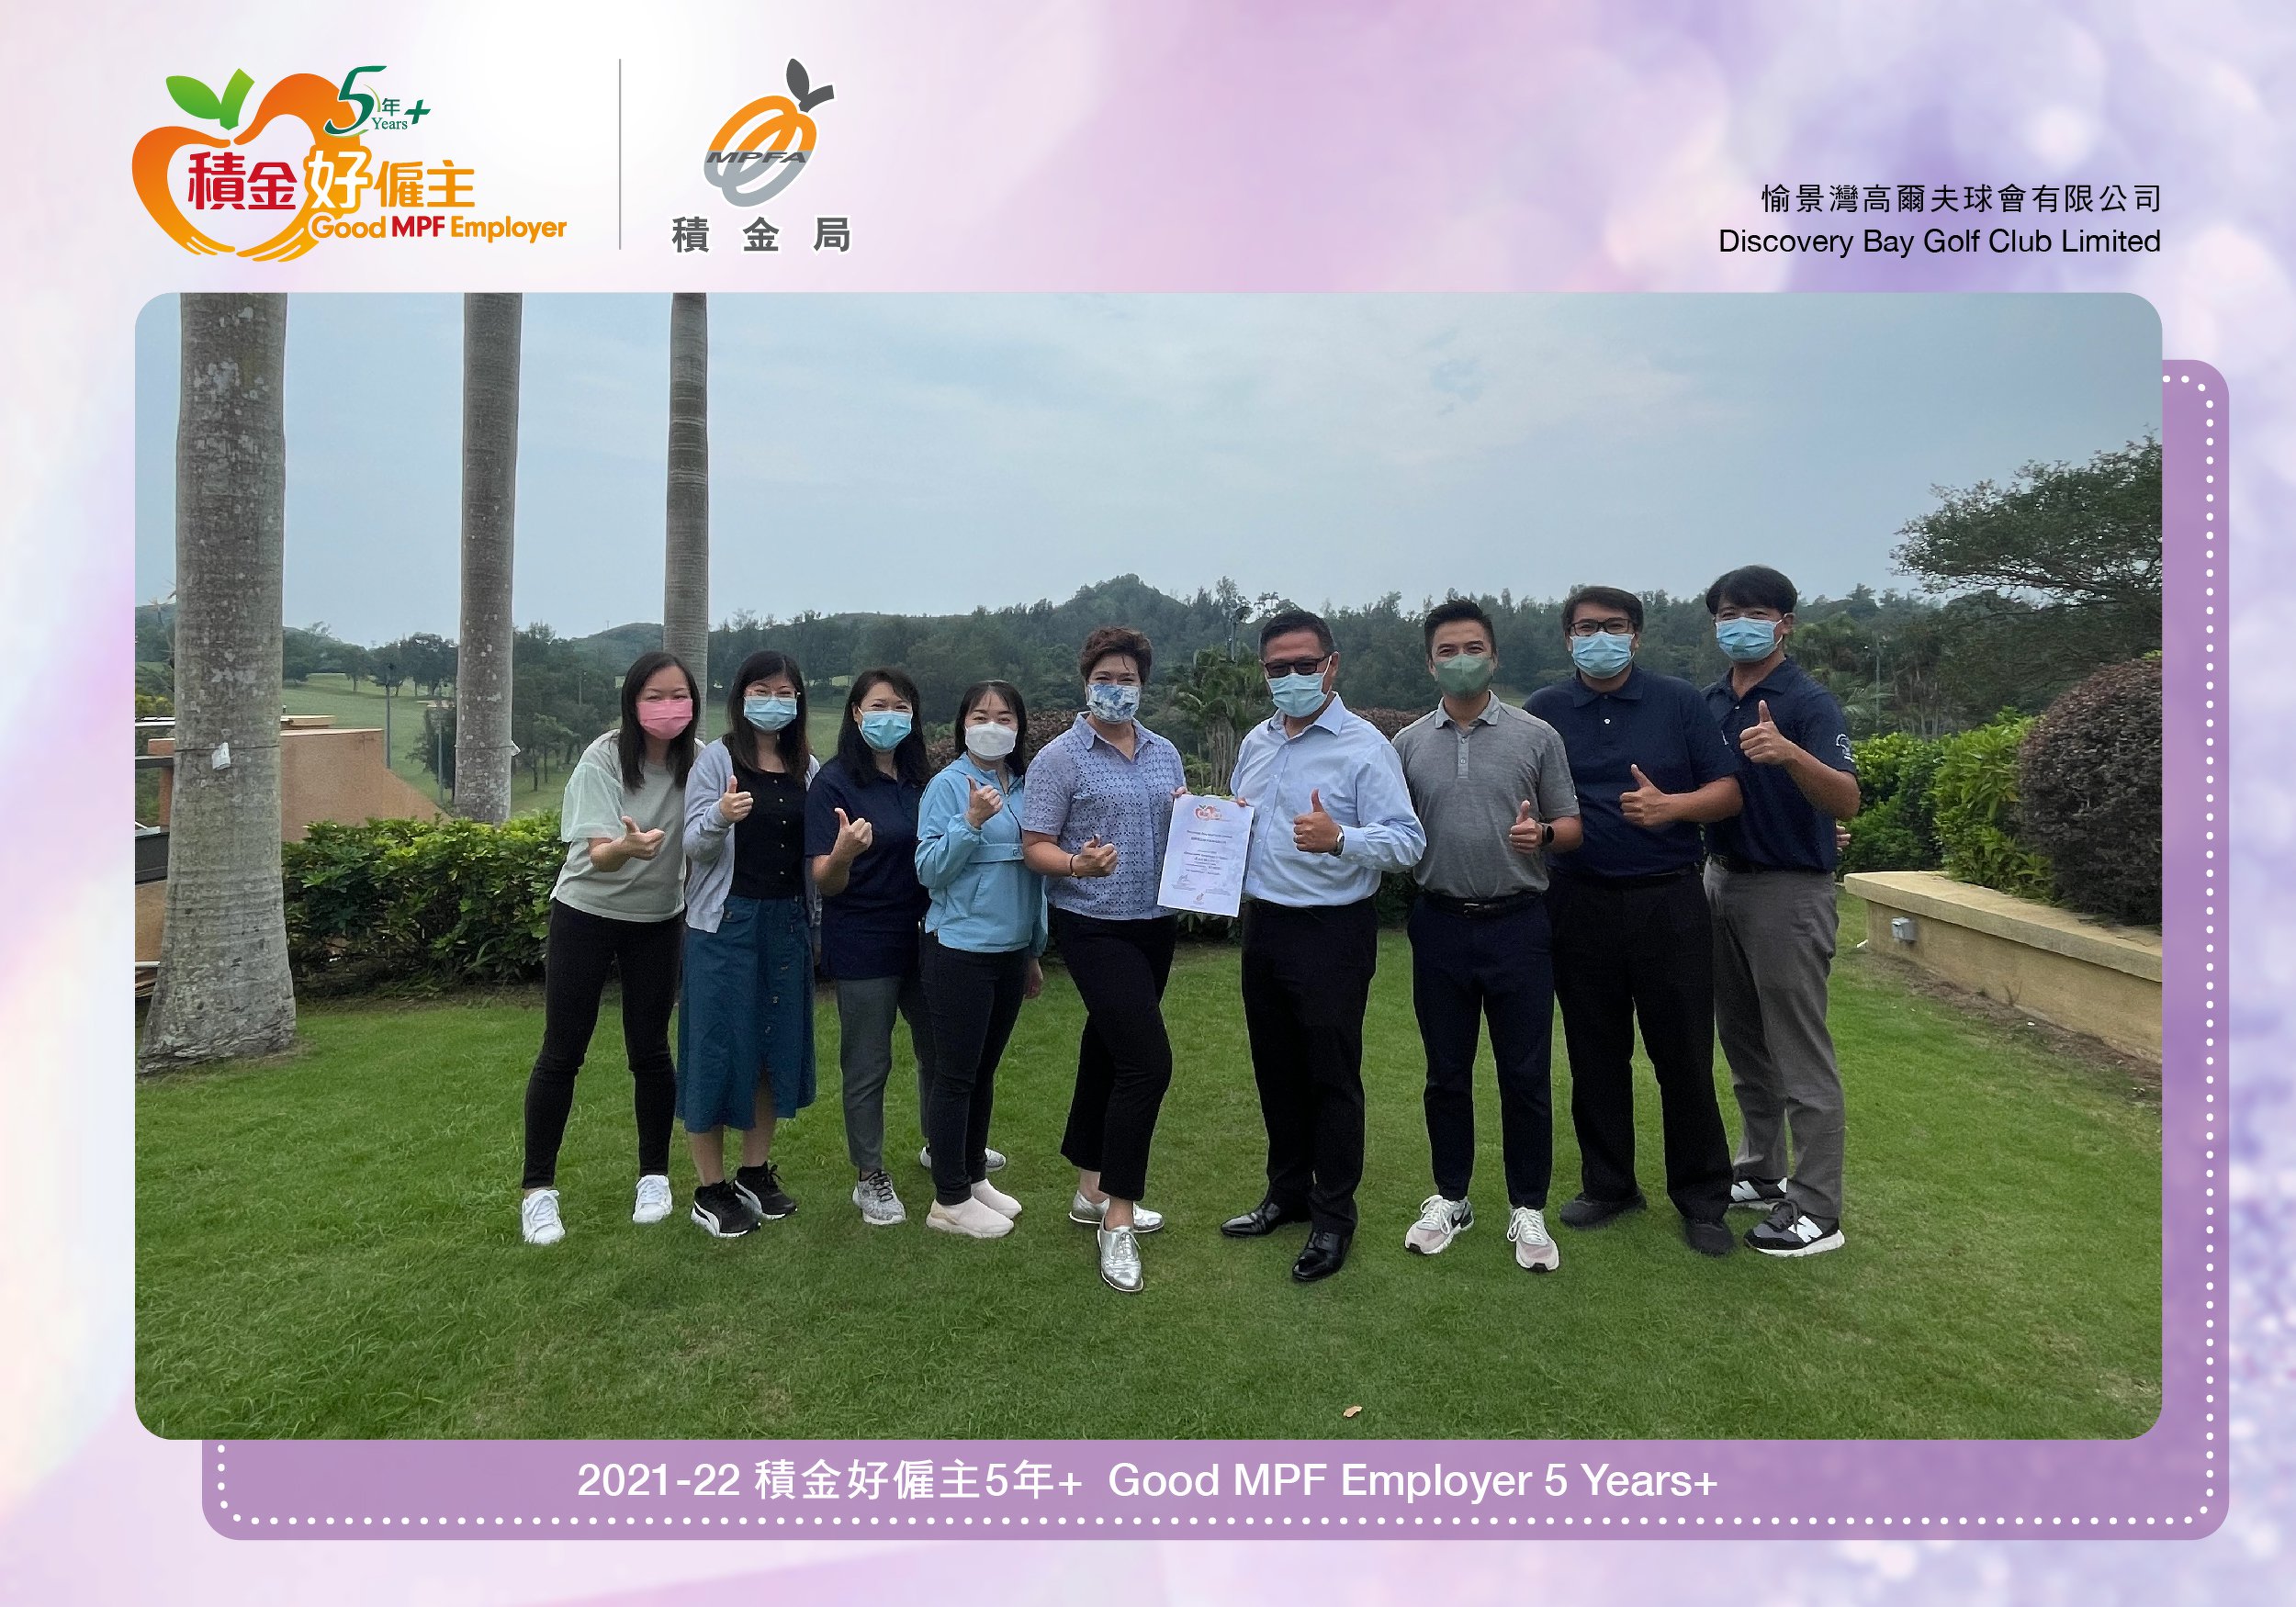 Discovery Bay Golf Club Limited 愉景灣高爾夫球會有限公司